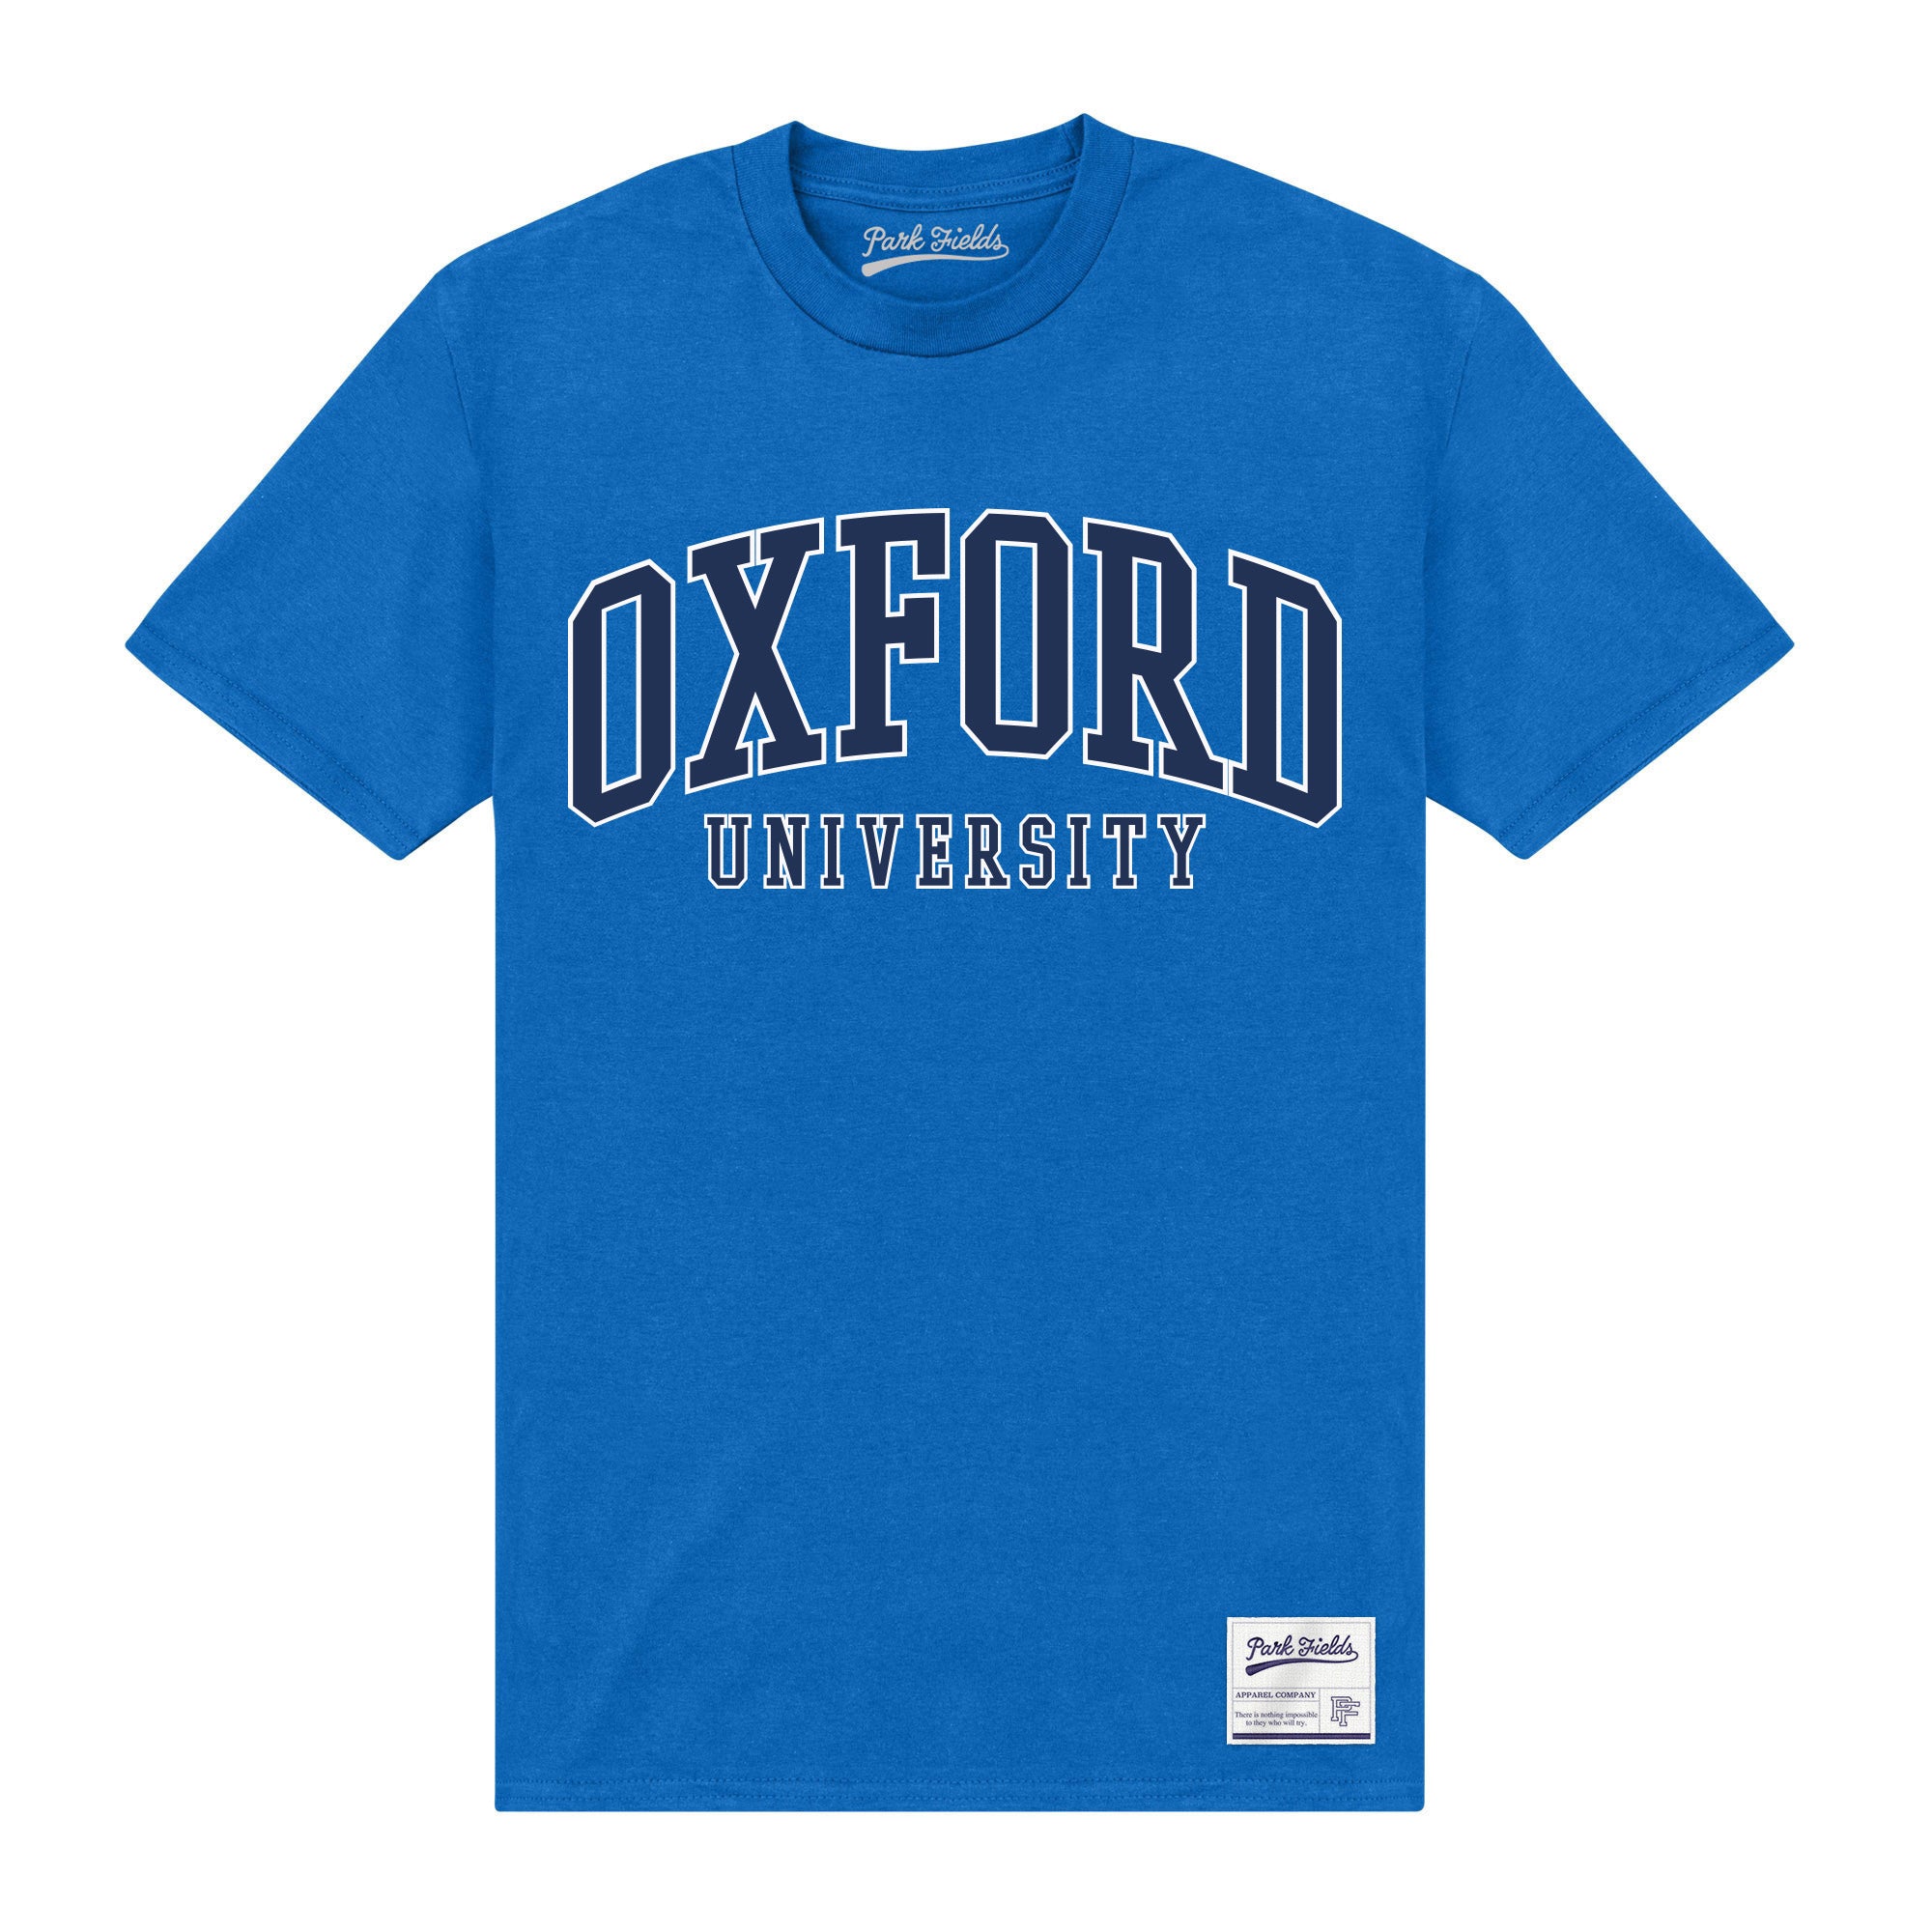 University Of Oxford Royal Blue T-Shirt